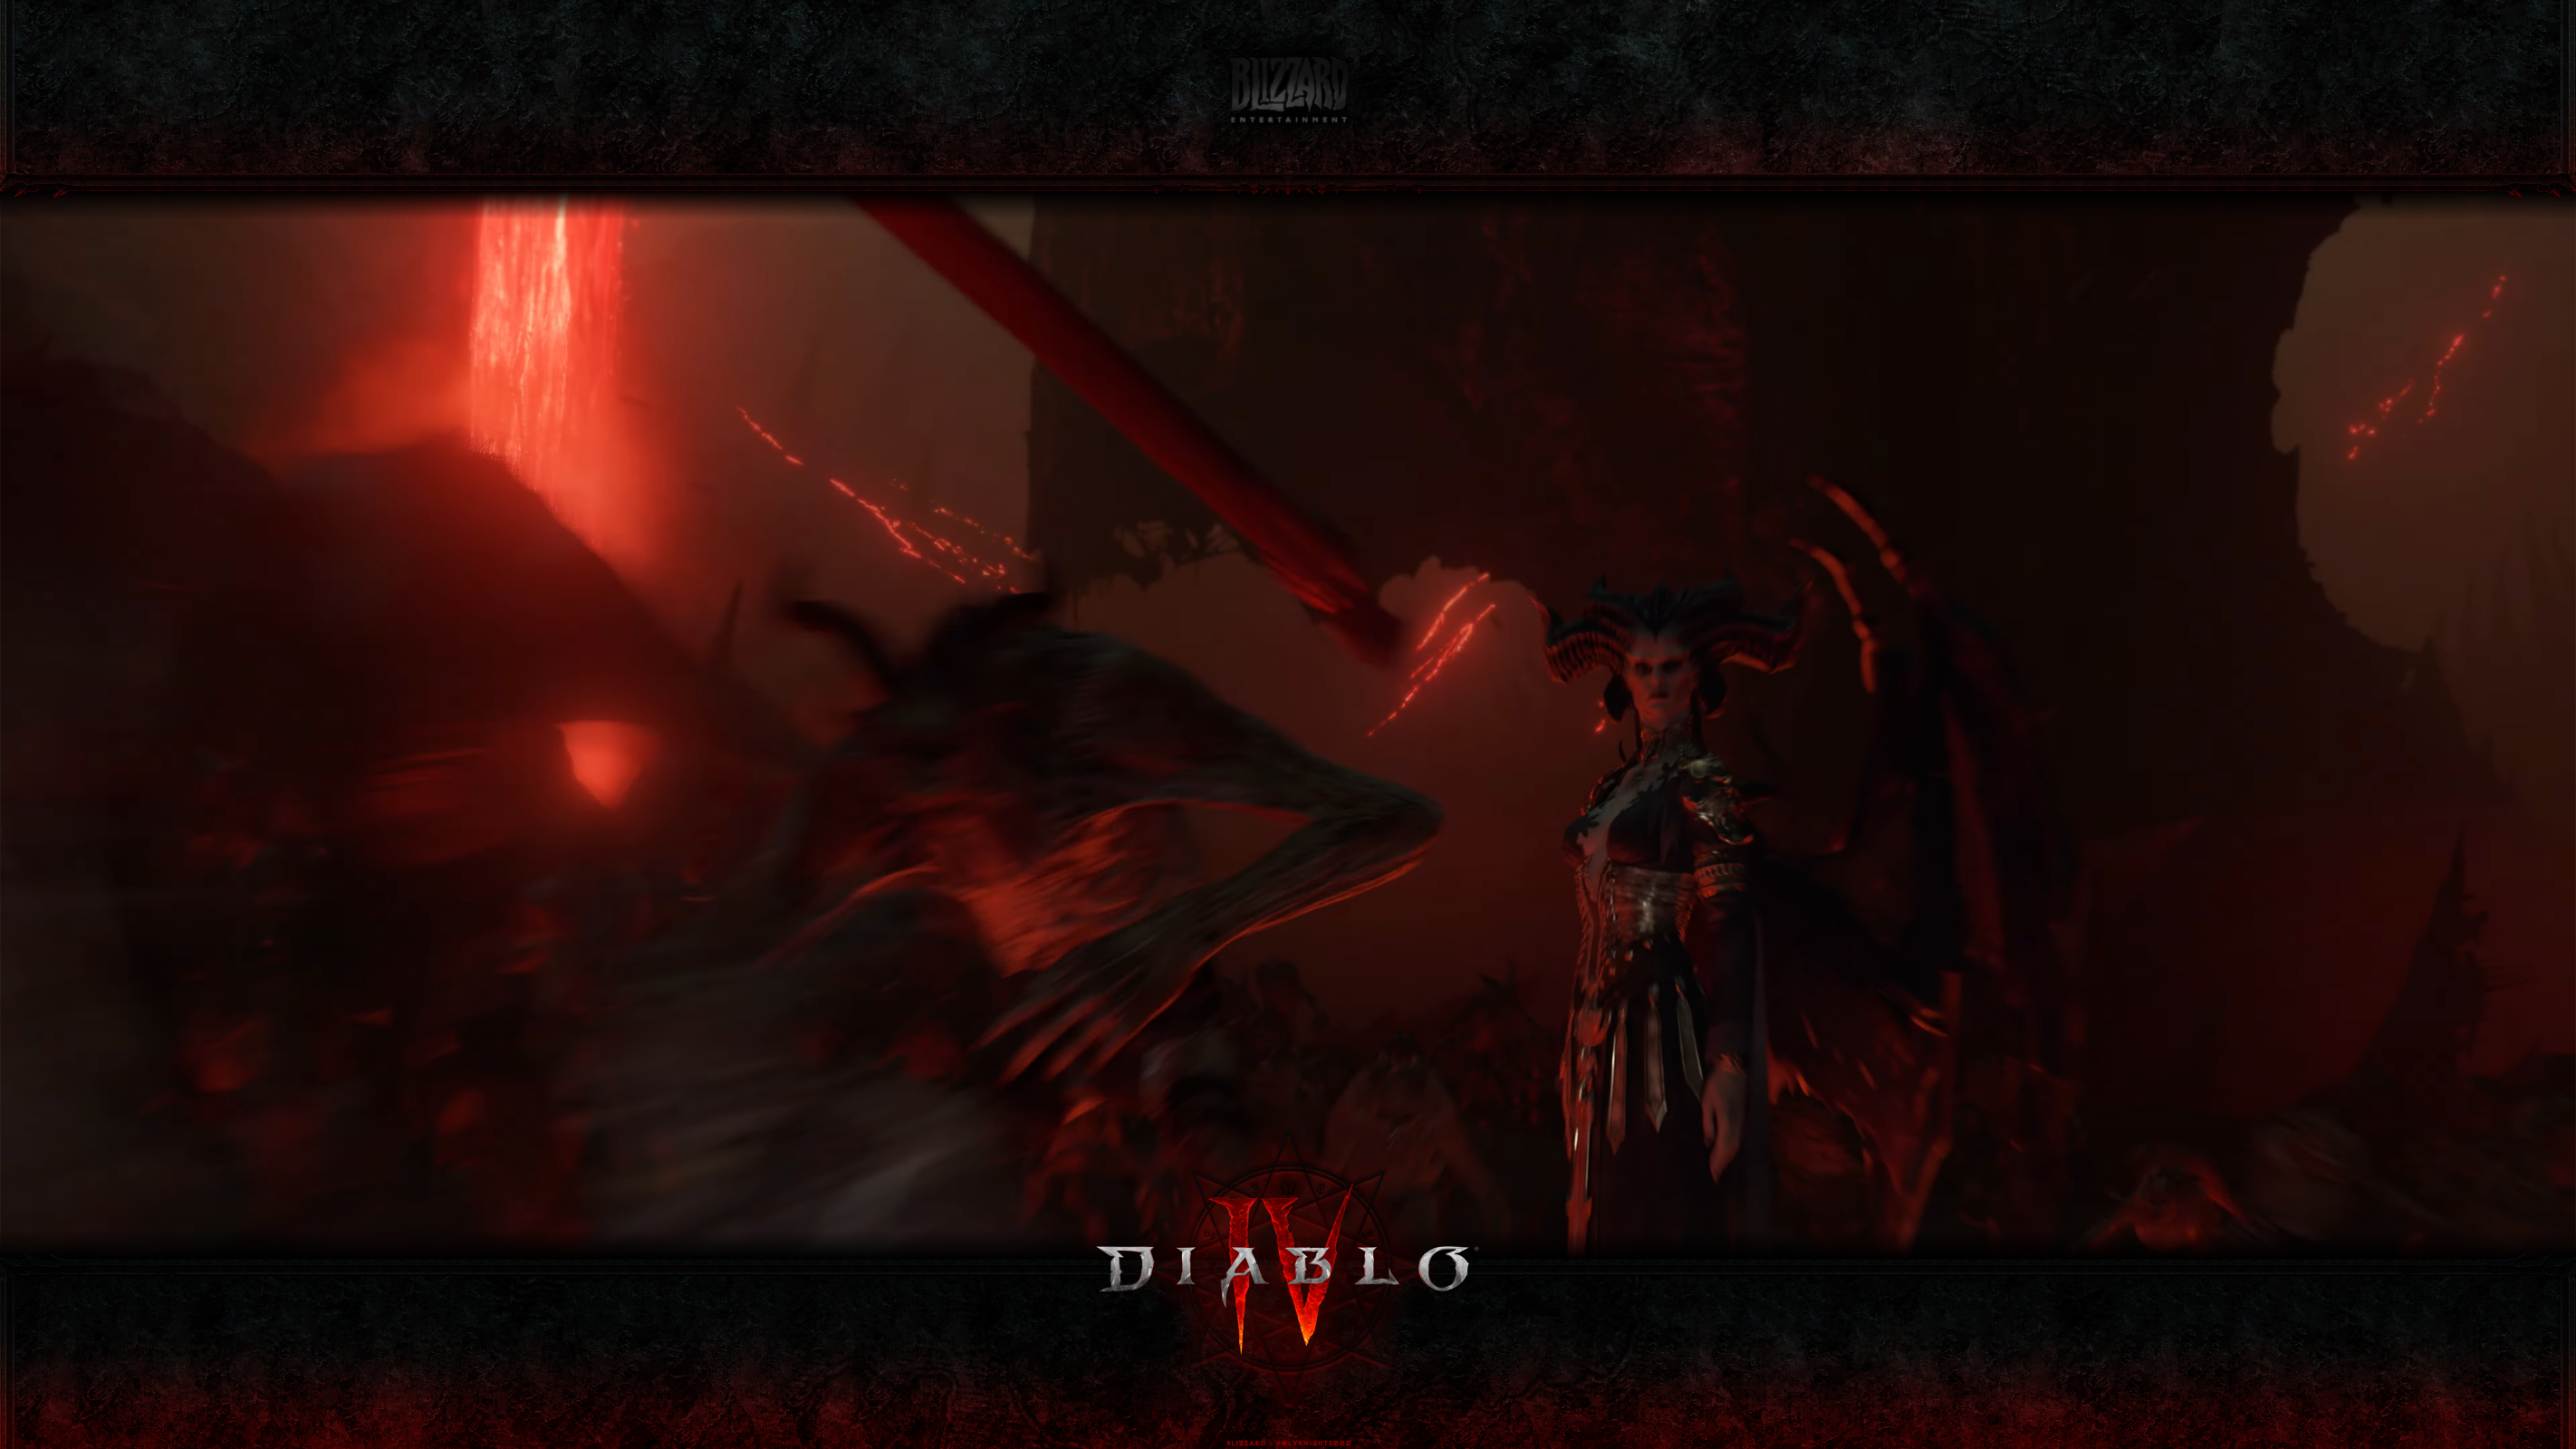 Diablo IV: The Release Date Trailer #54 - End